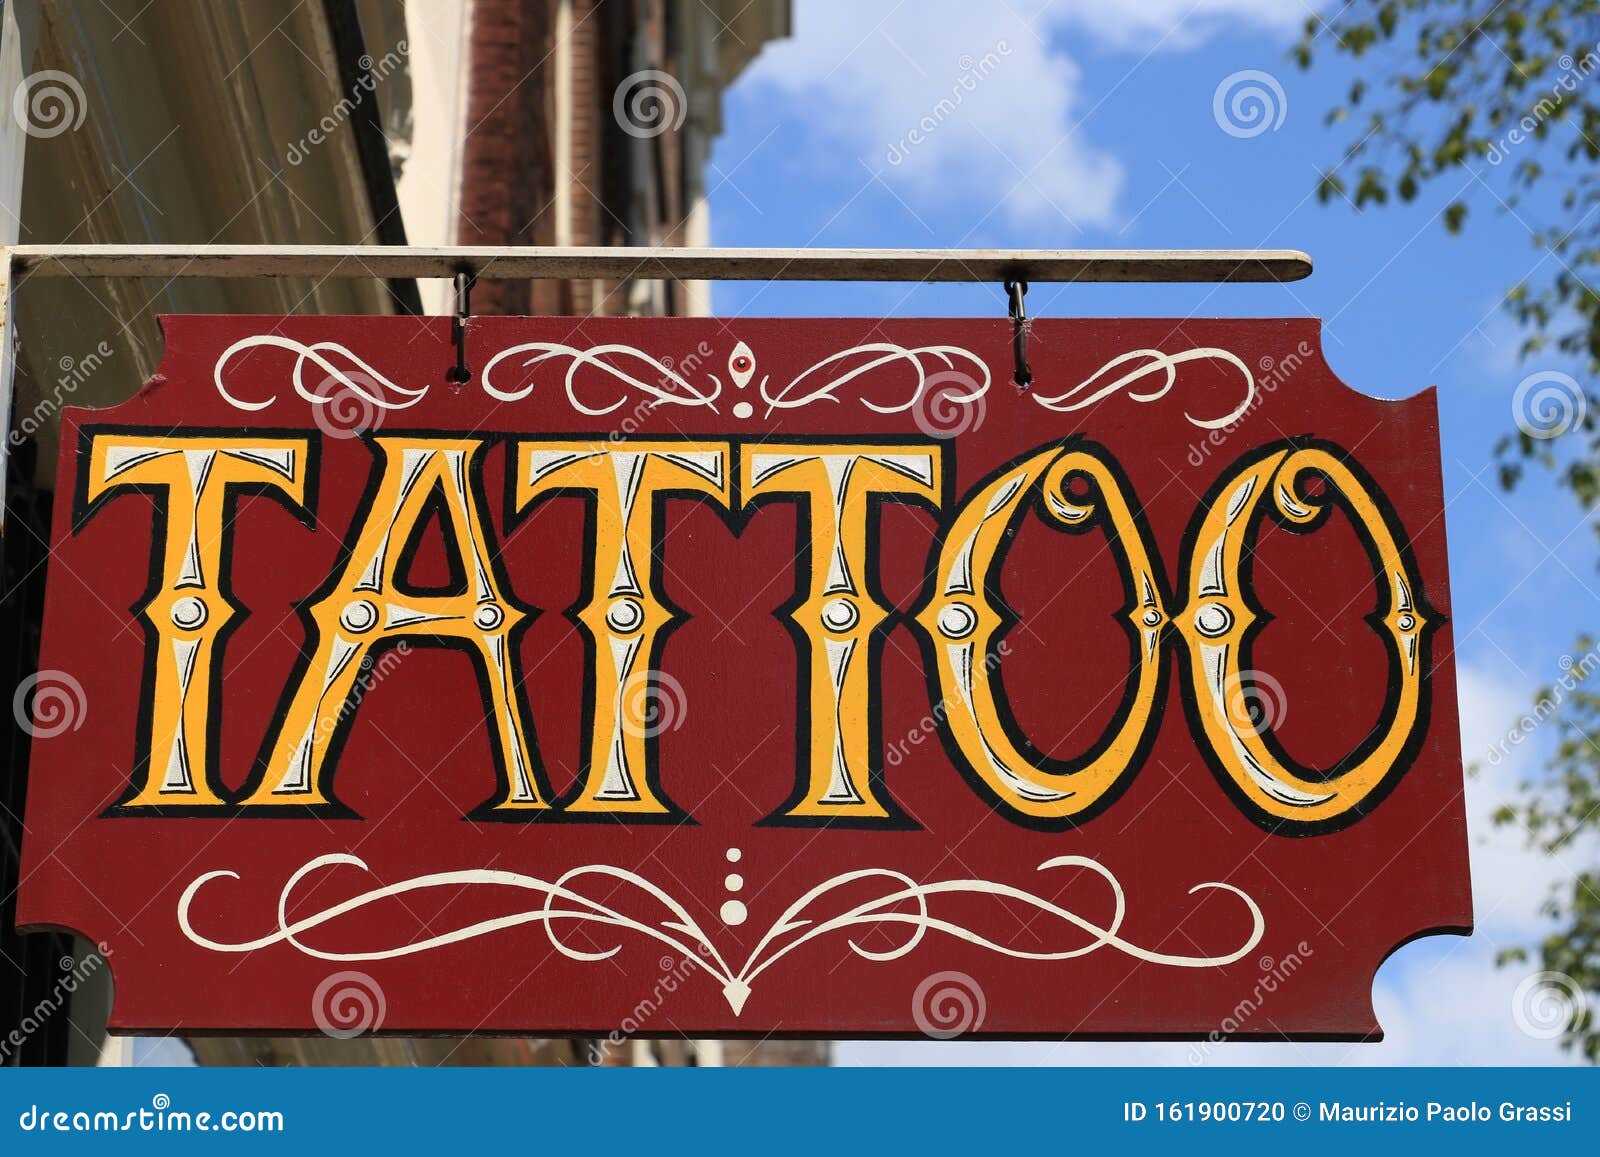 personalized tattoo studio sign writing shirt 10893 - Rustypod Store